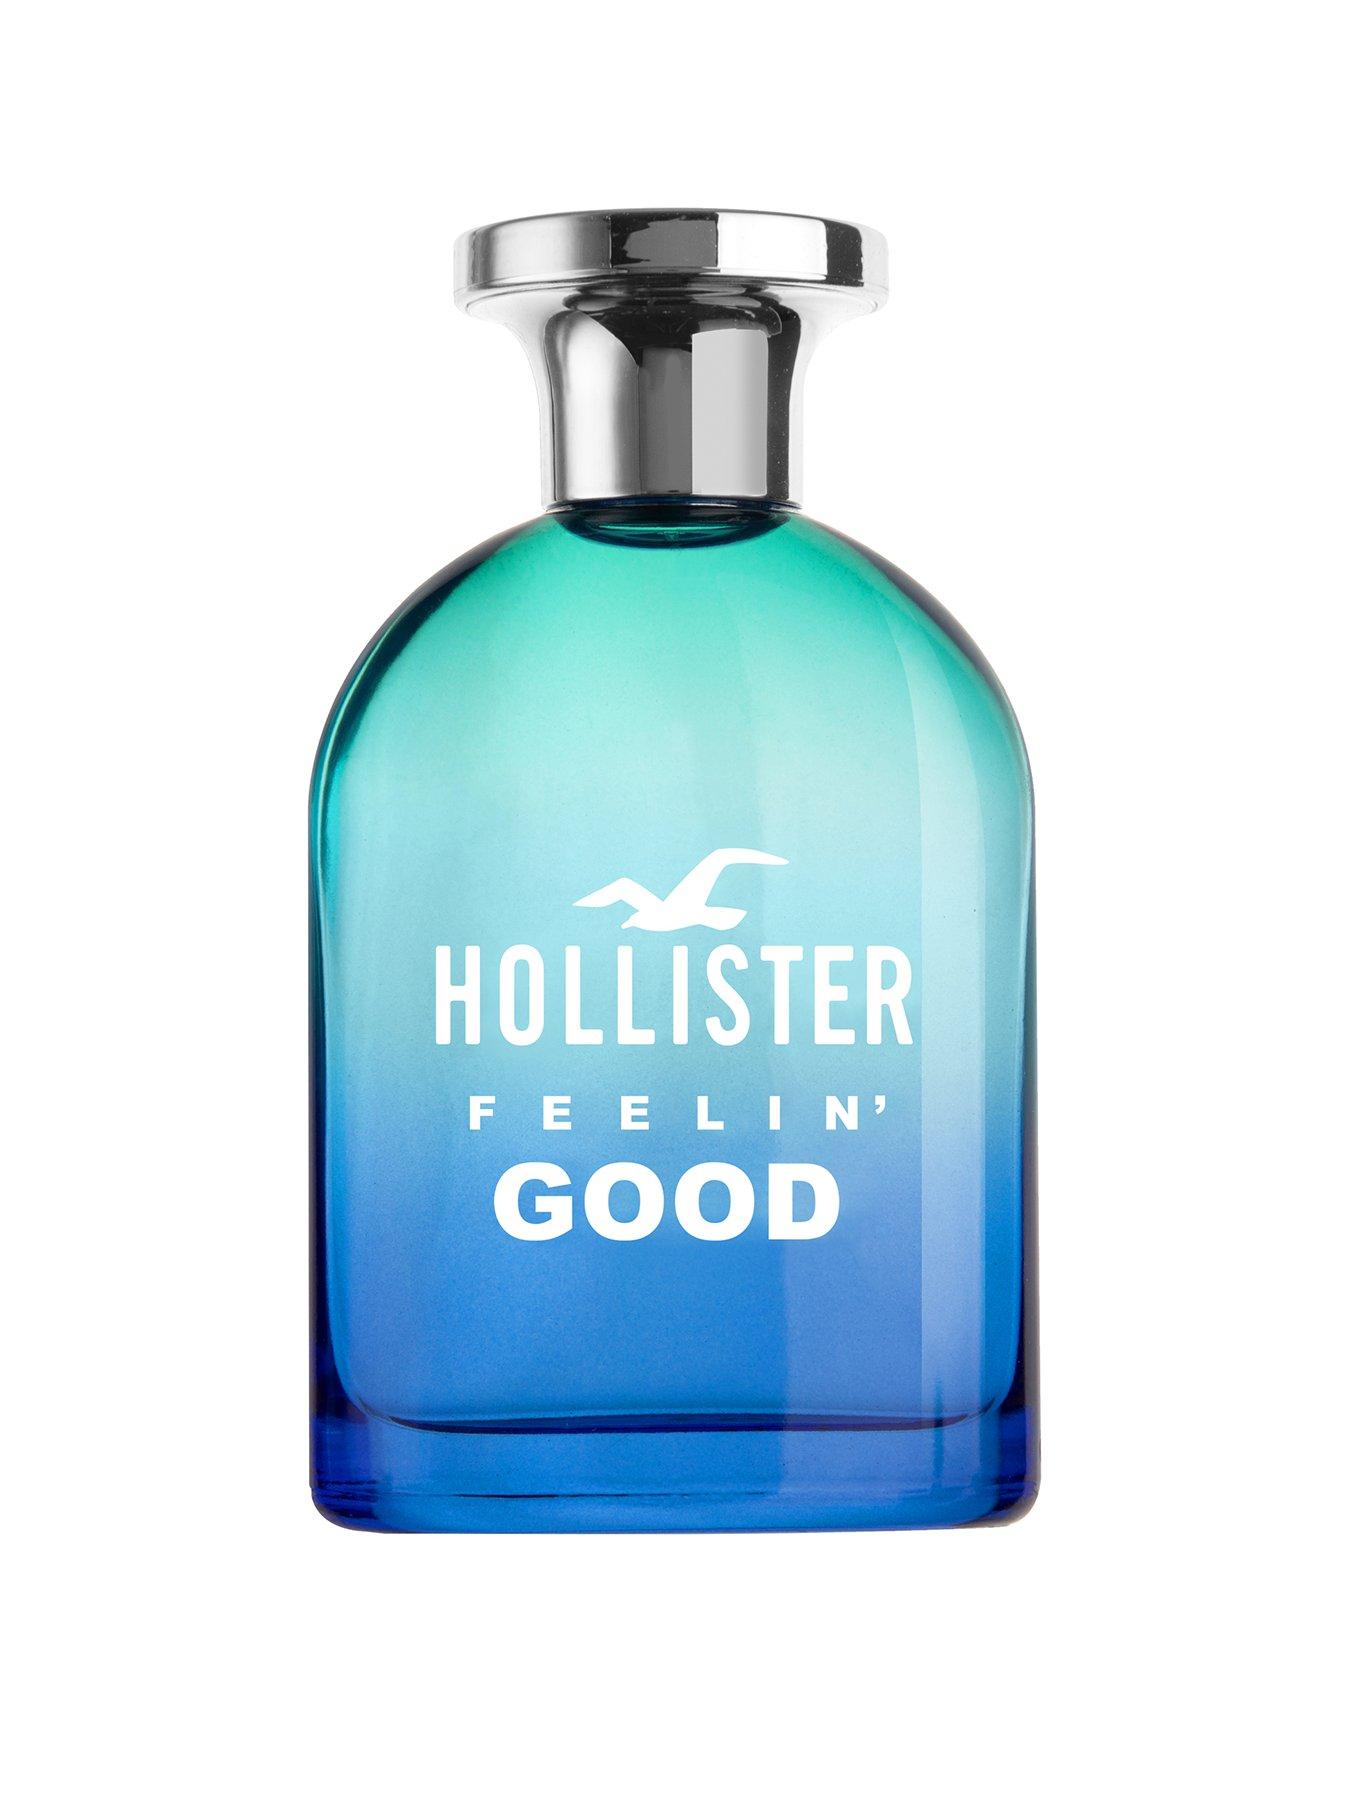 Clean Logo Design Inspiration: Hollister